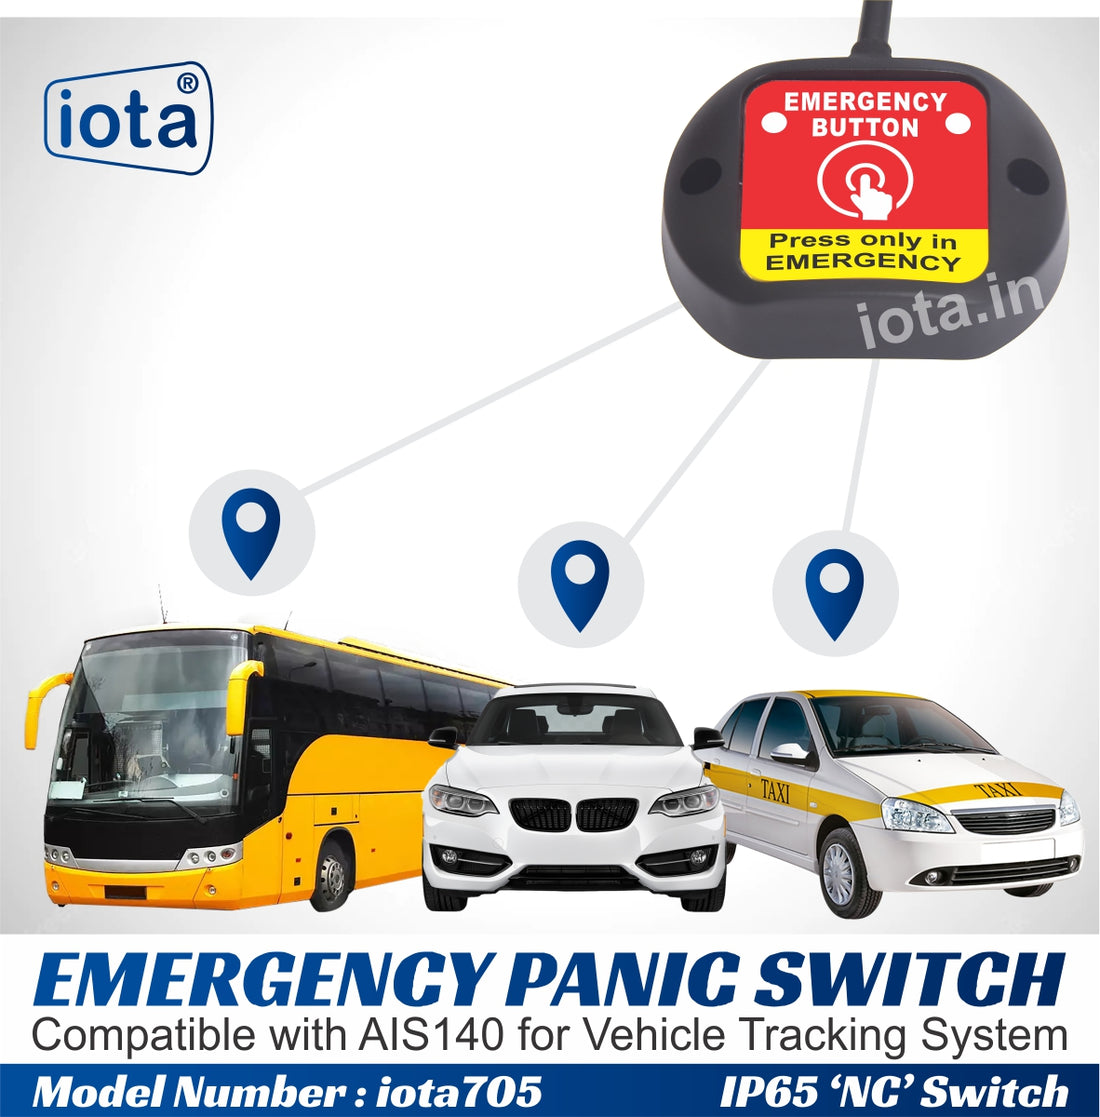 iota Emergency Panic Switch iota705 Compatible with AIS 140